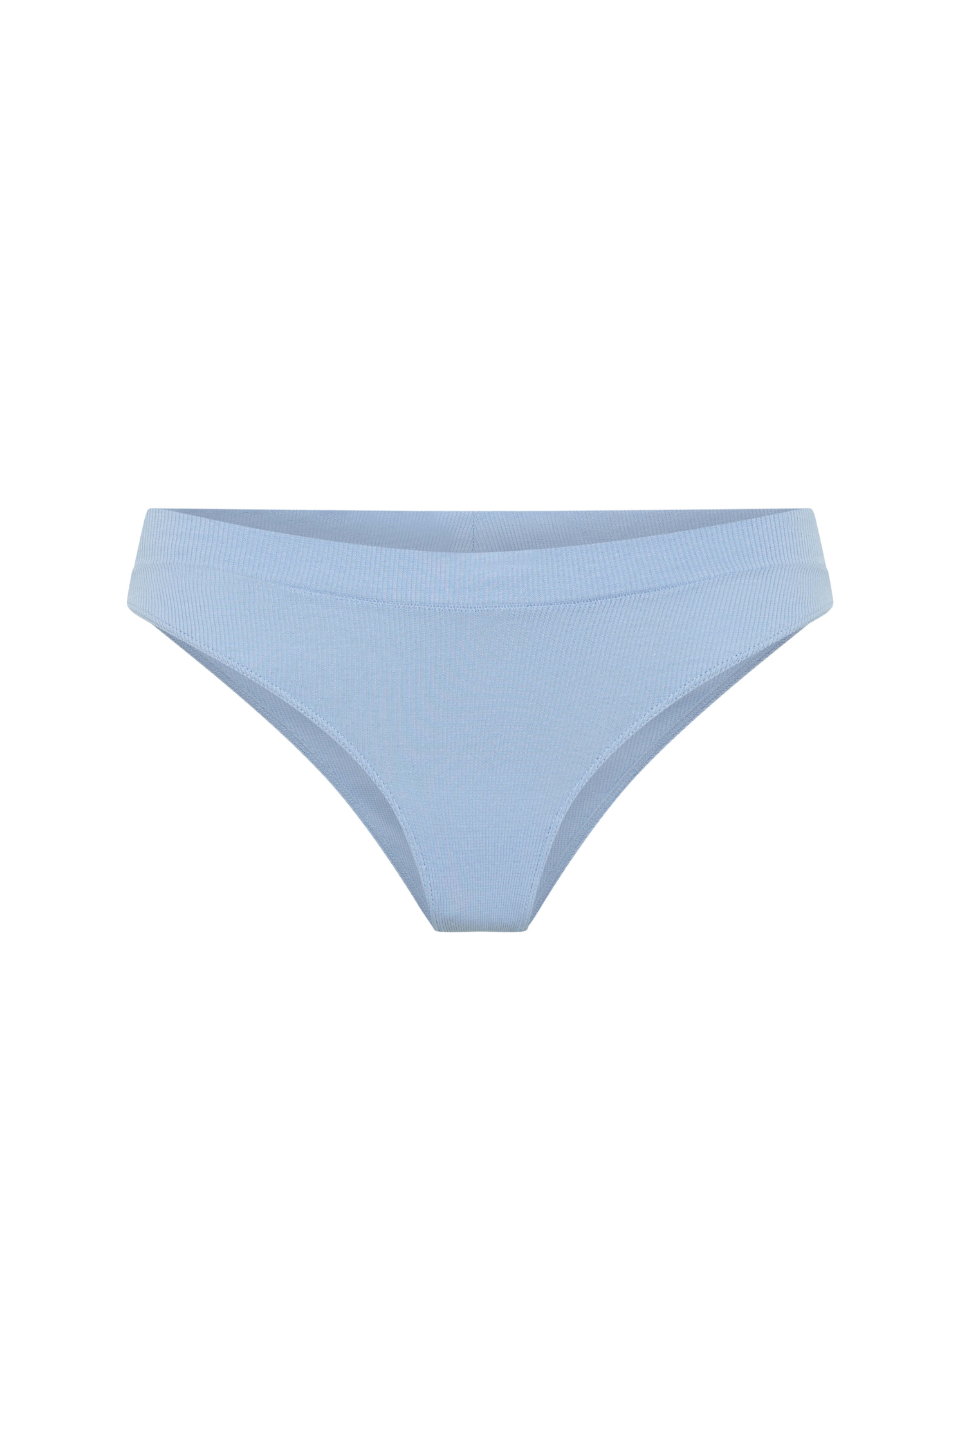 The Ribbed Bikini, Undies - First Thing Underwear